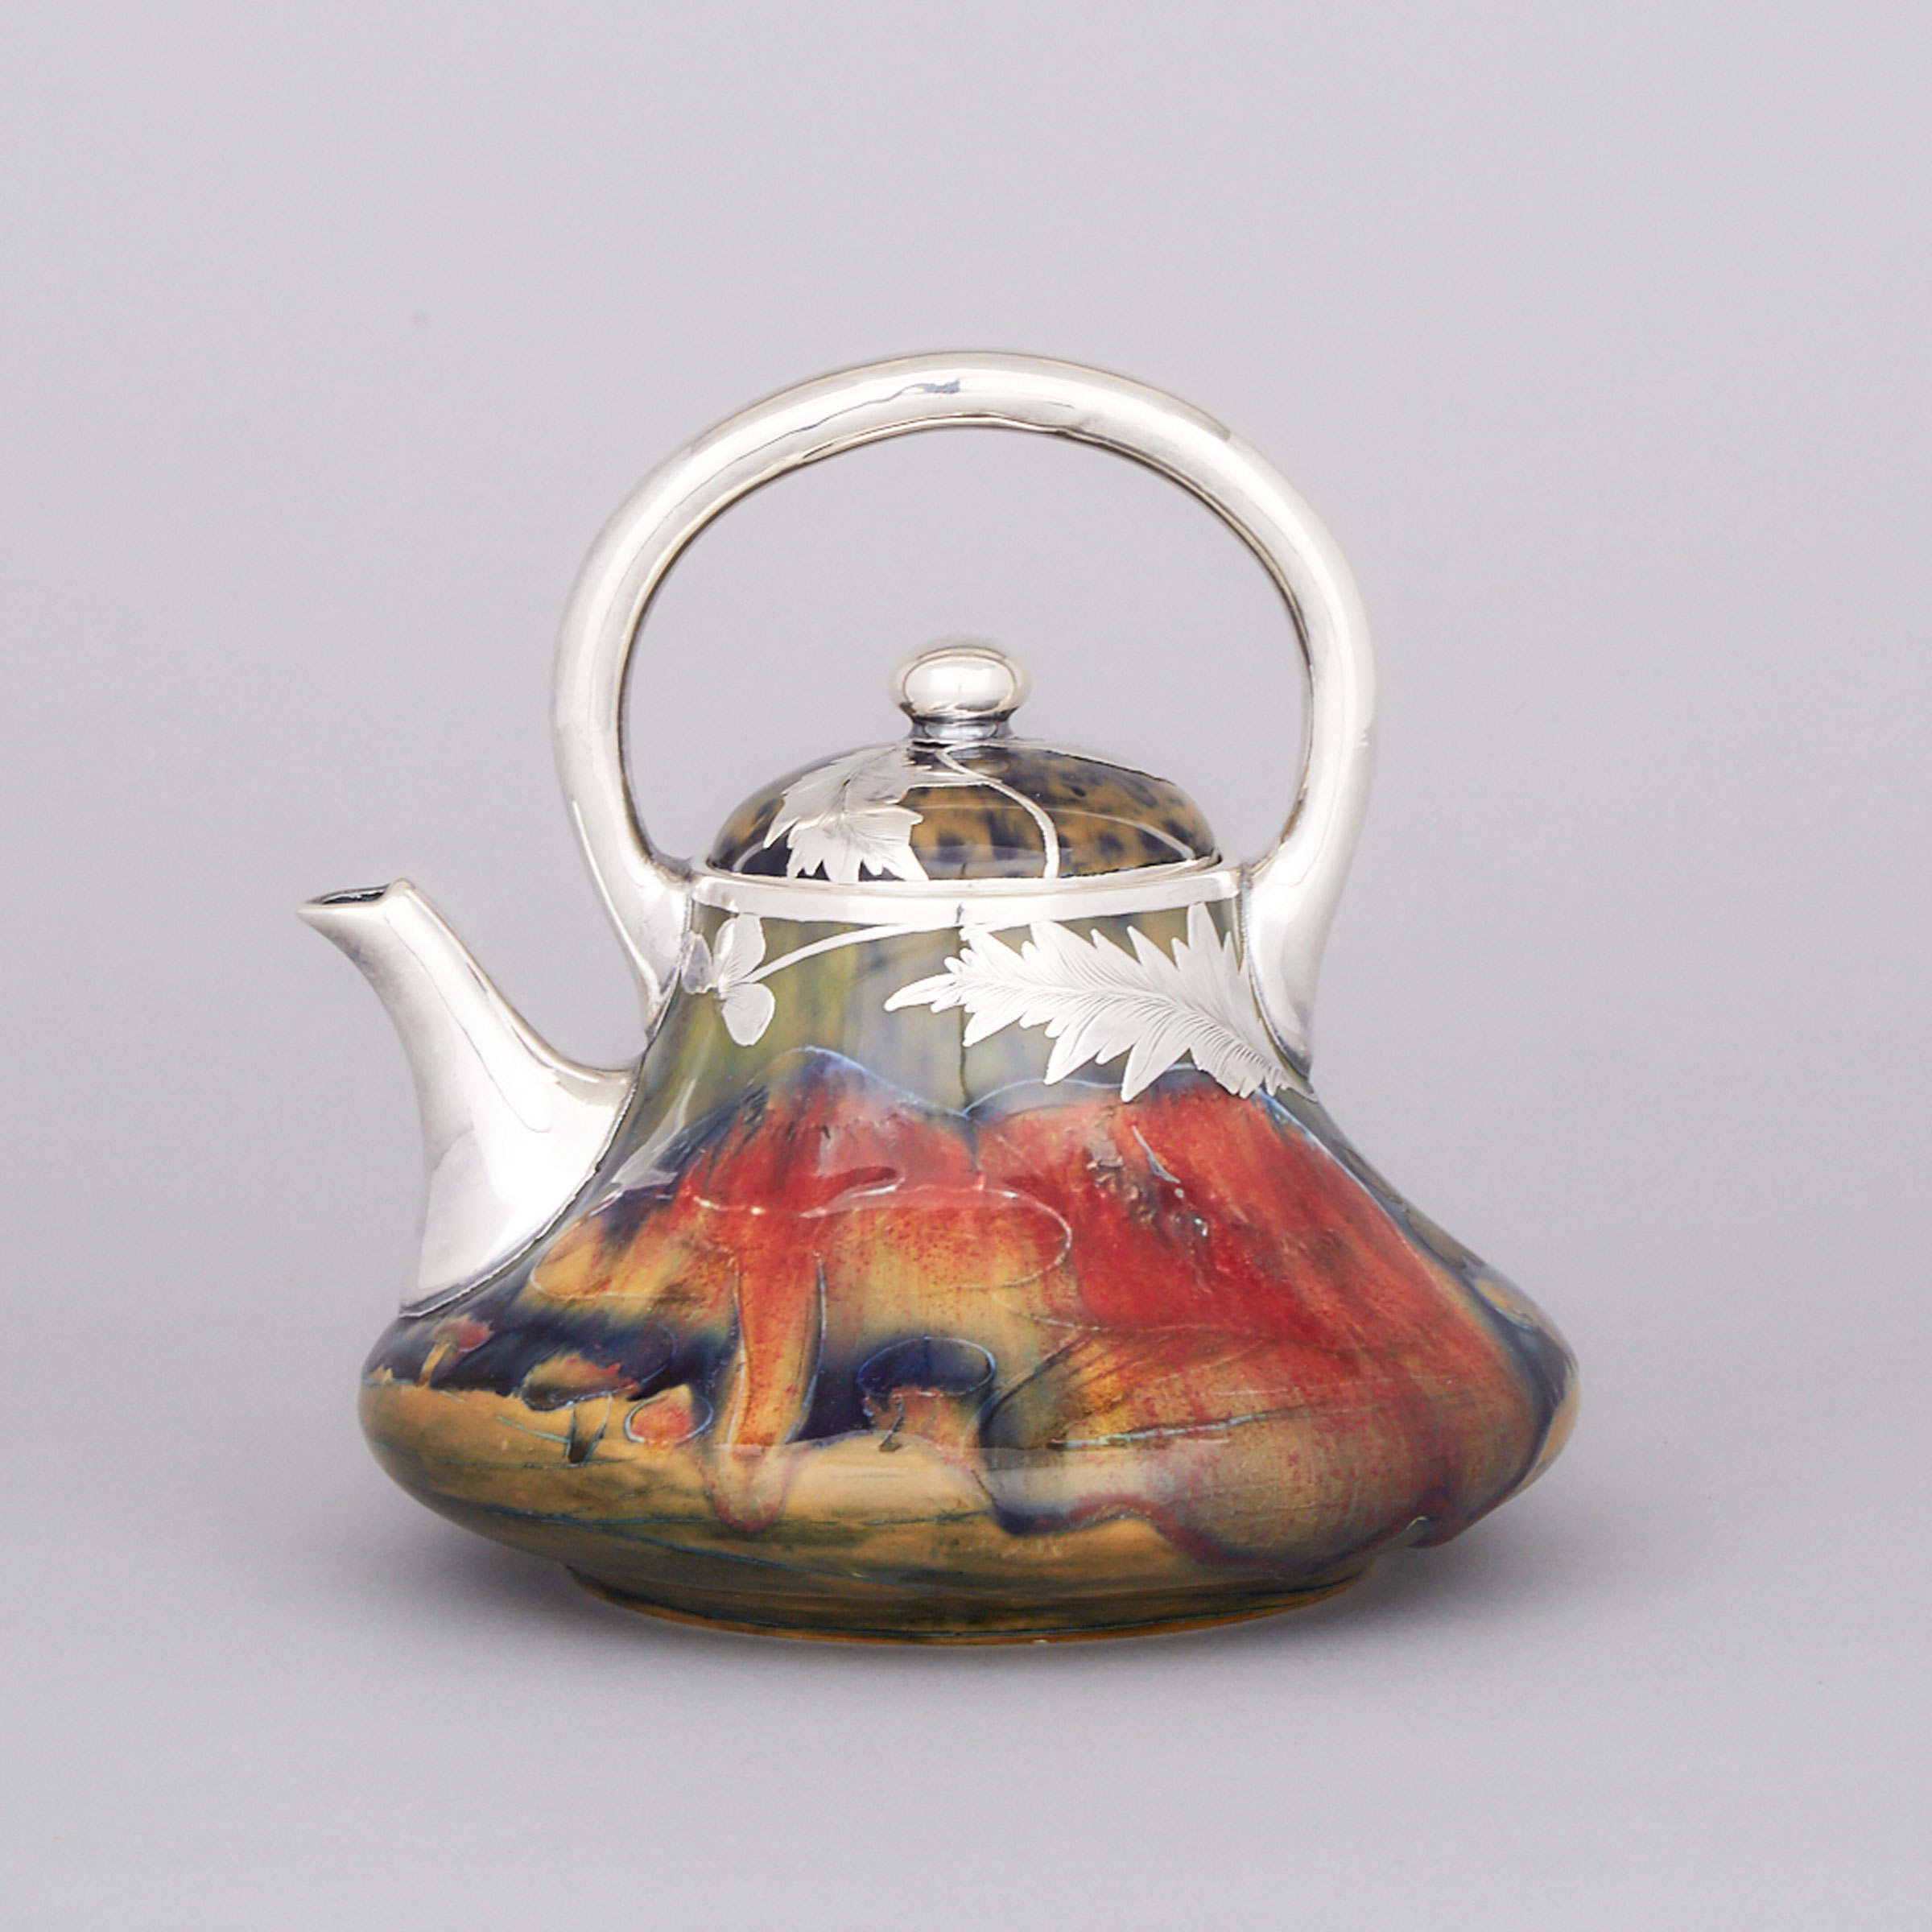 Macintyre Moorcroft Silver Overlaid Claremont Teapot, c.1905